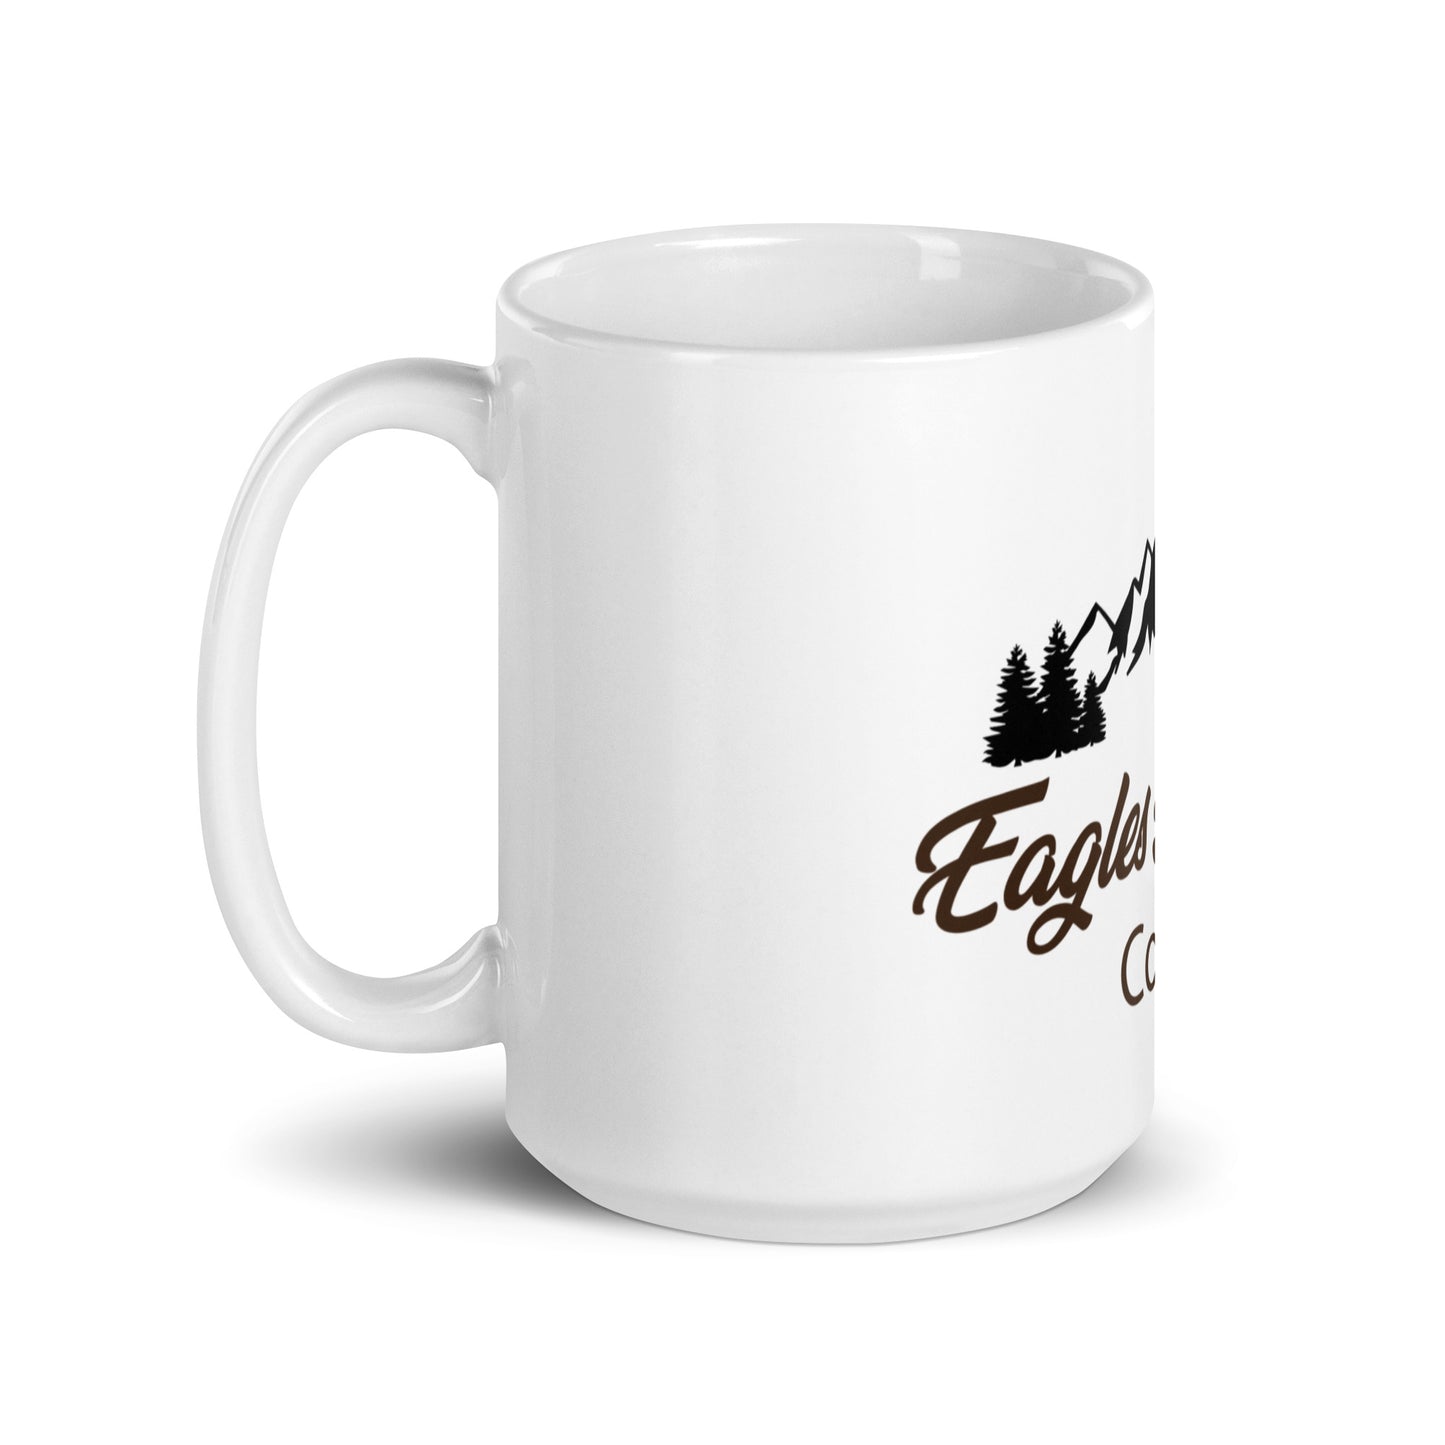 Eagles Domain Coffee White Glossy Mug - Eagles Domain Coffee